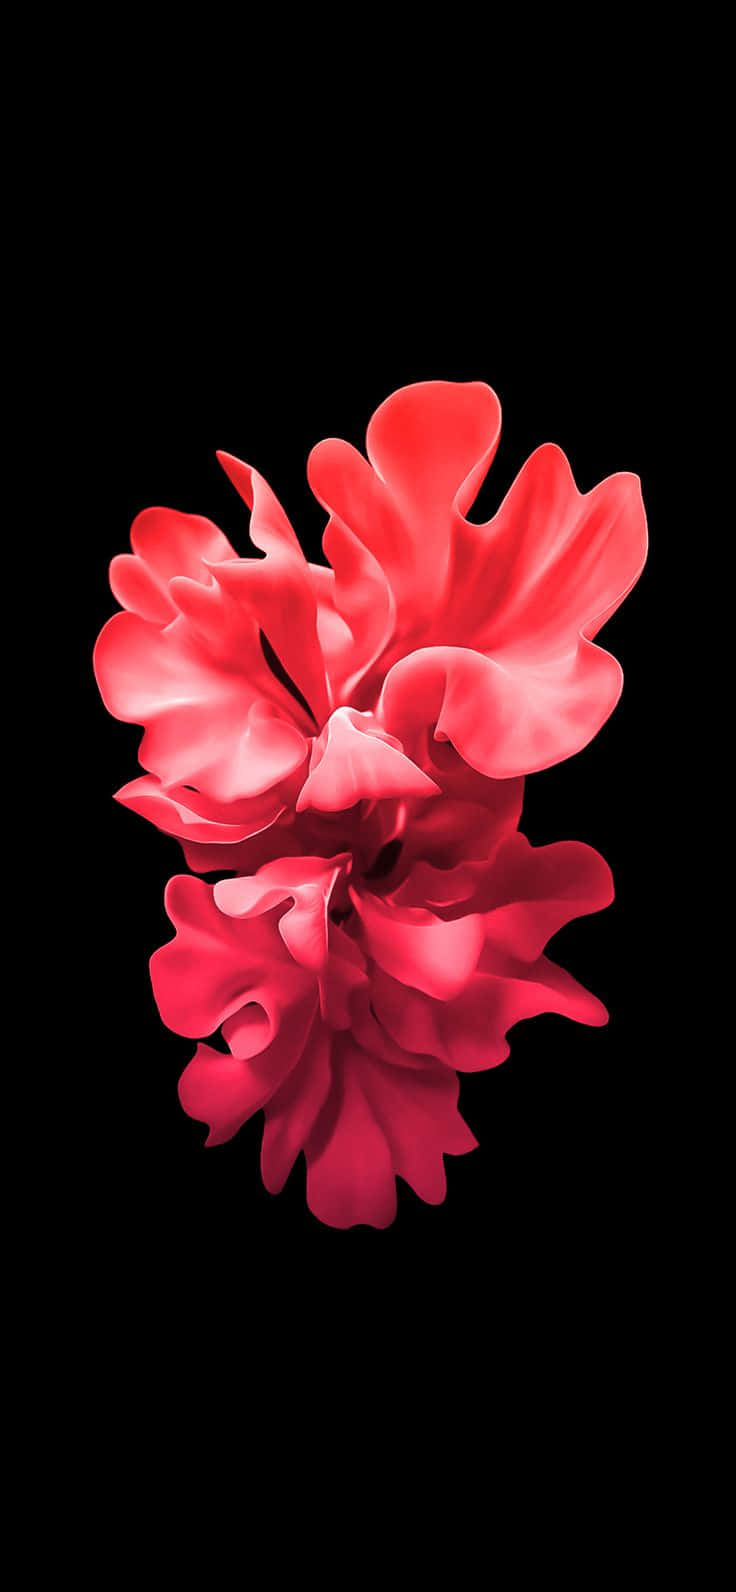 Vibrant Red Floweron Black Background Wallpaper